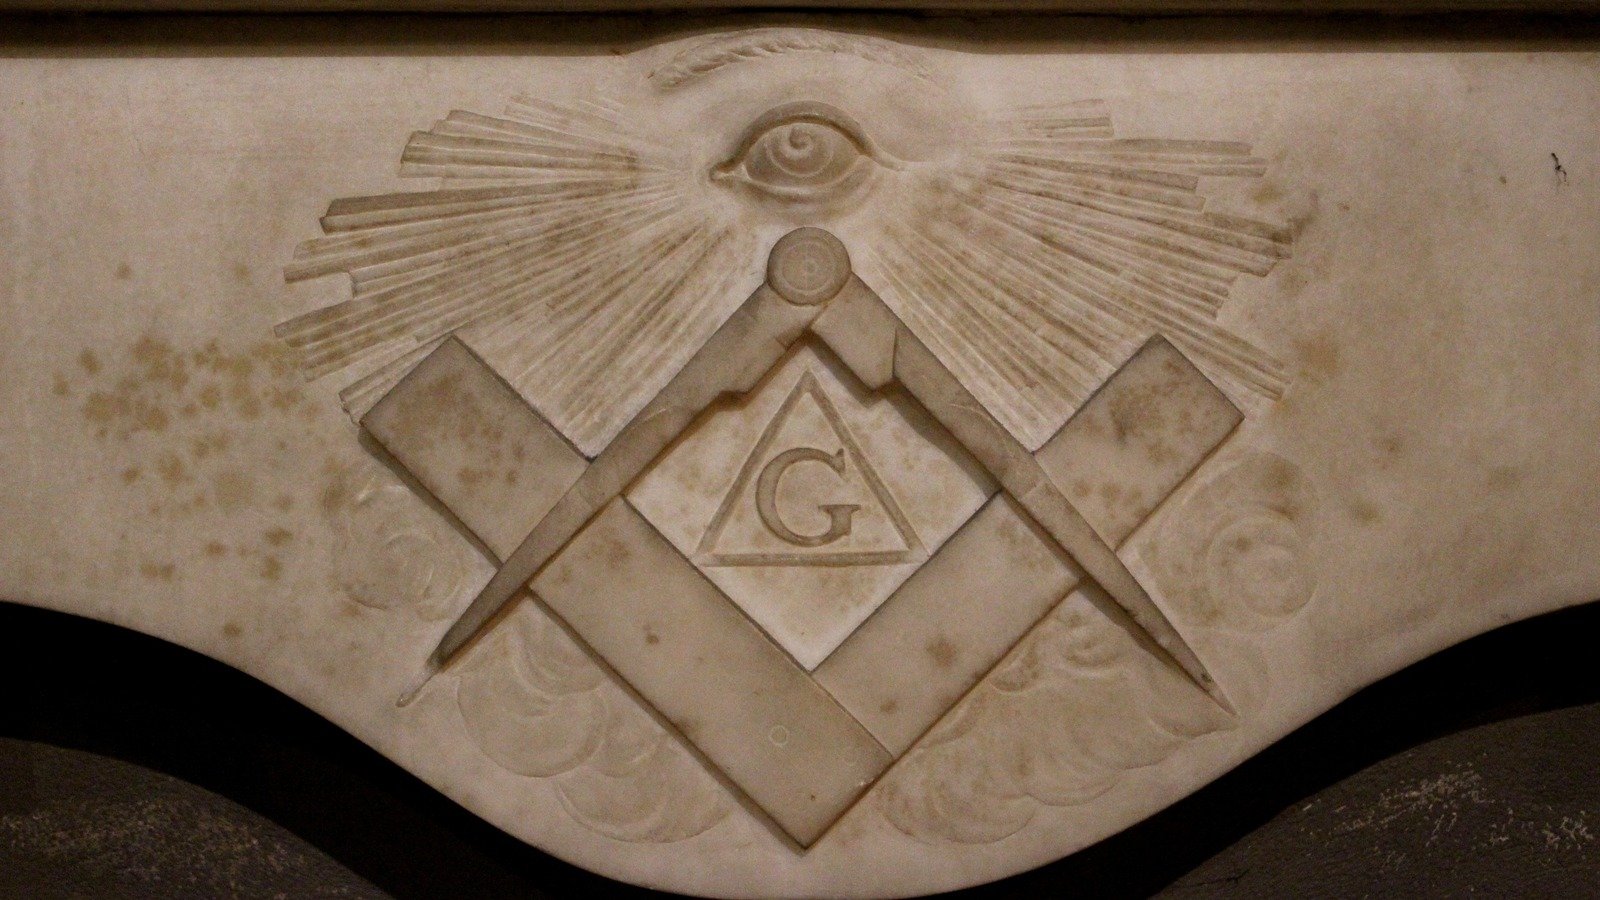 What Do Freemasons Actually Believe? - Grunge